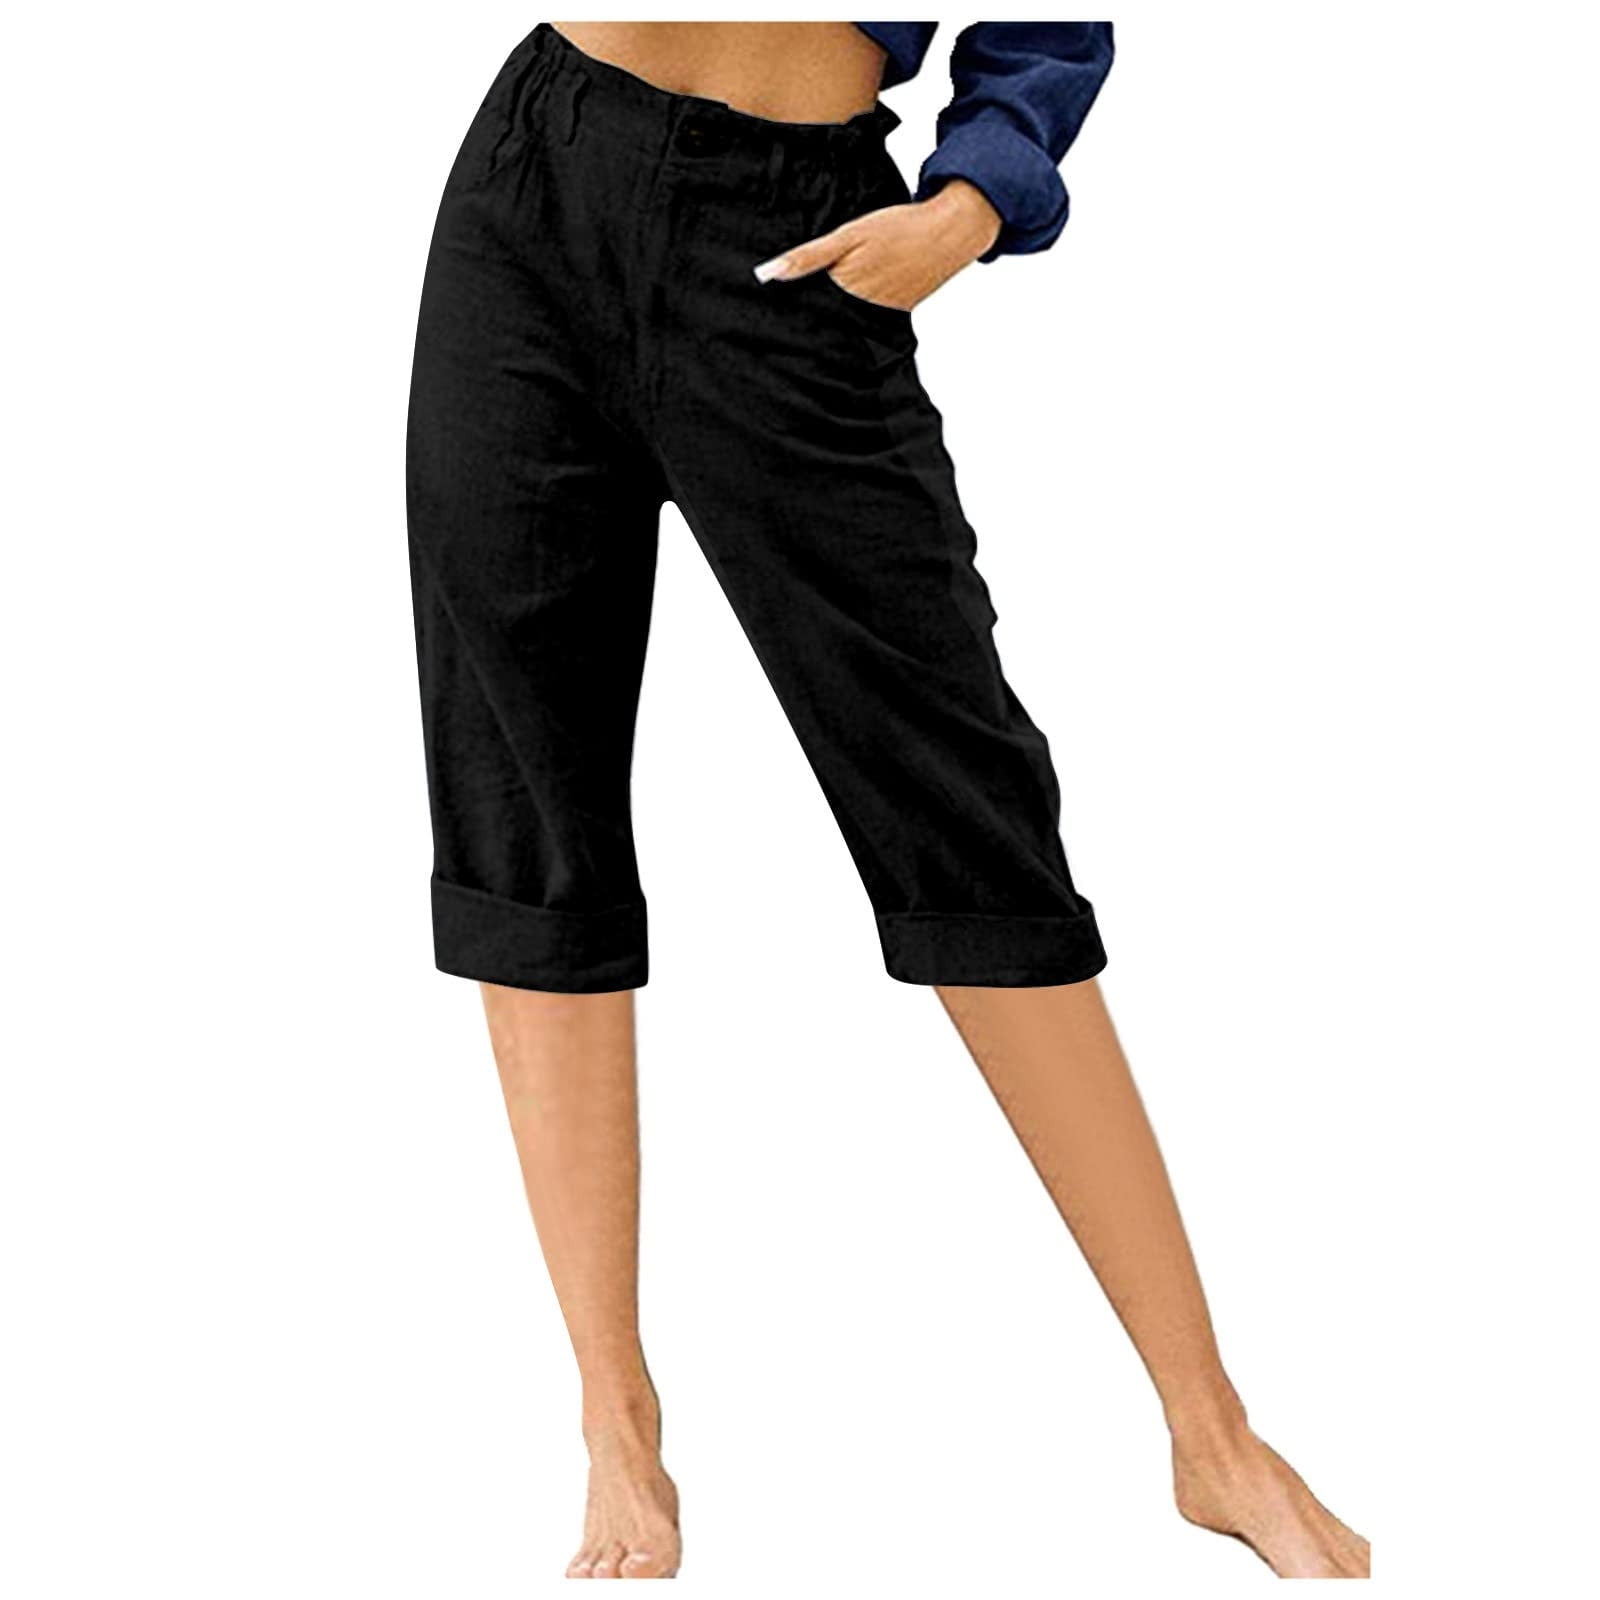 AKAFMK Capri Pants for Women Casual Summer Cotton Linen Pants Loose ...